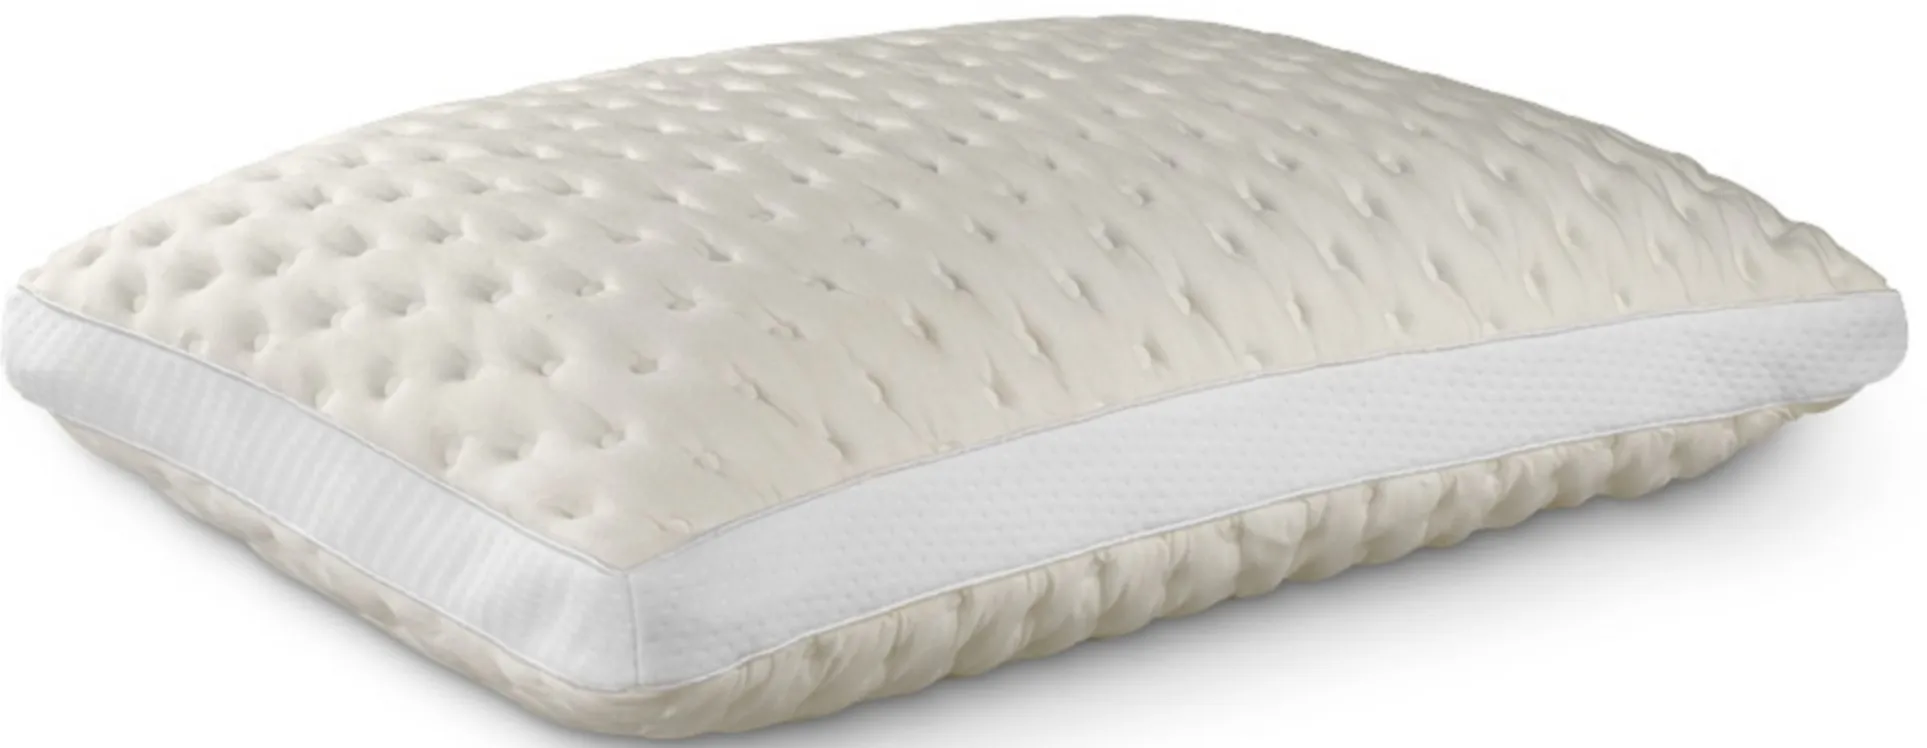 PureCare Bamboo Memory Foam Puff Pillow in White by PureCare